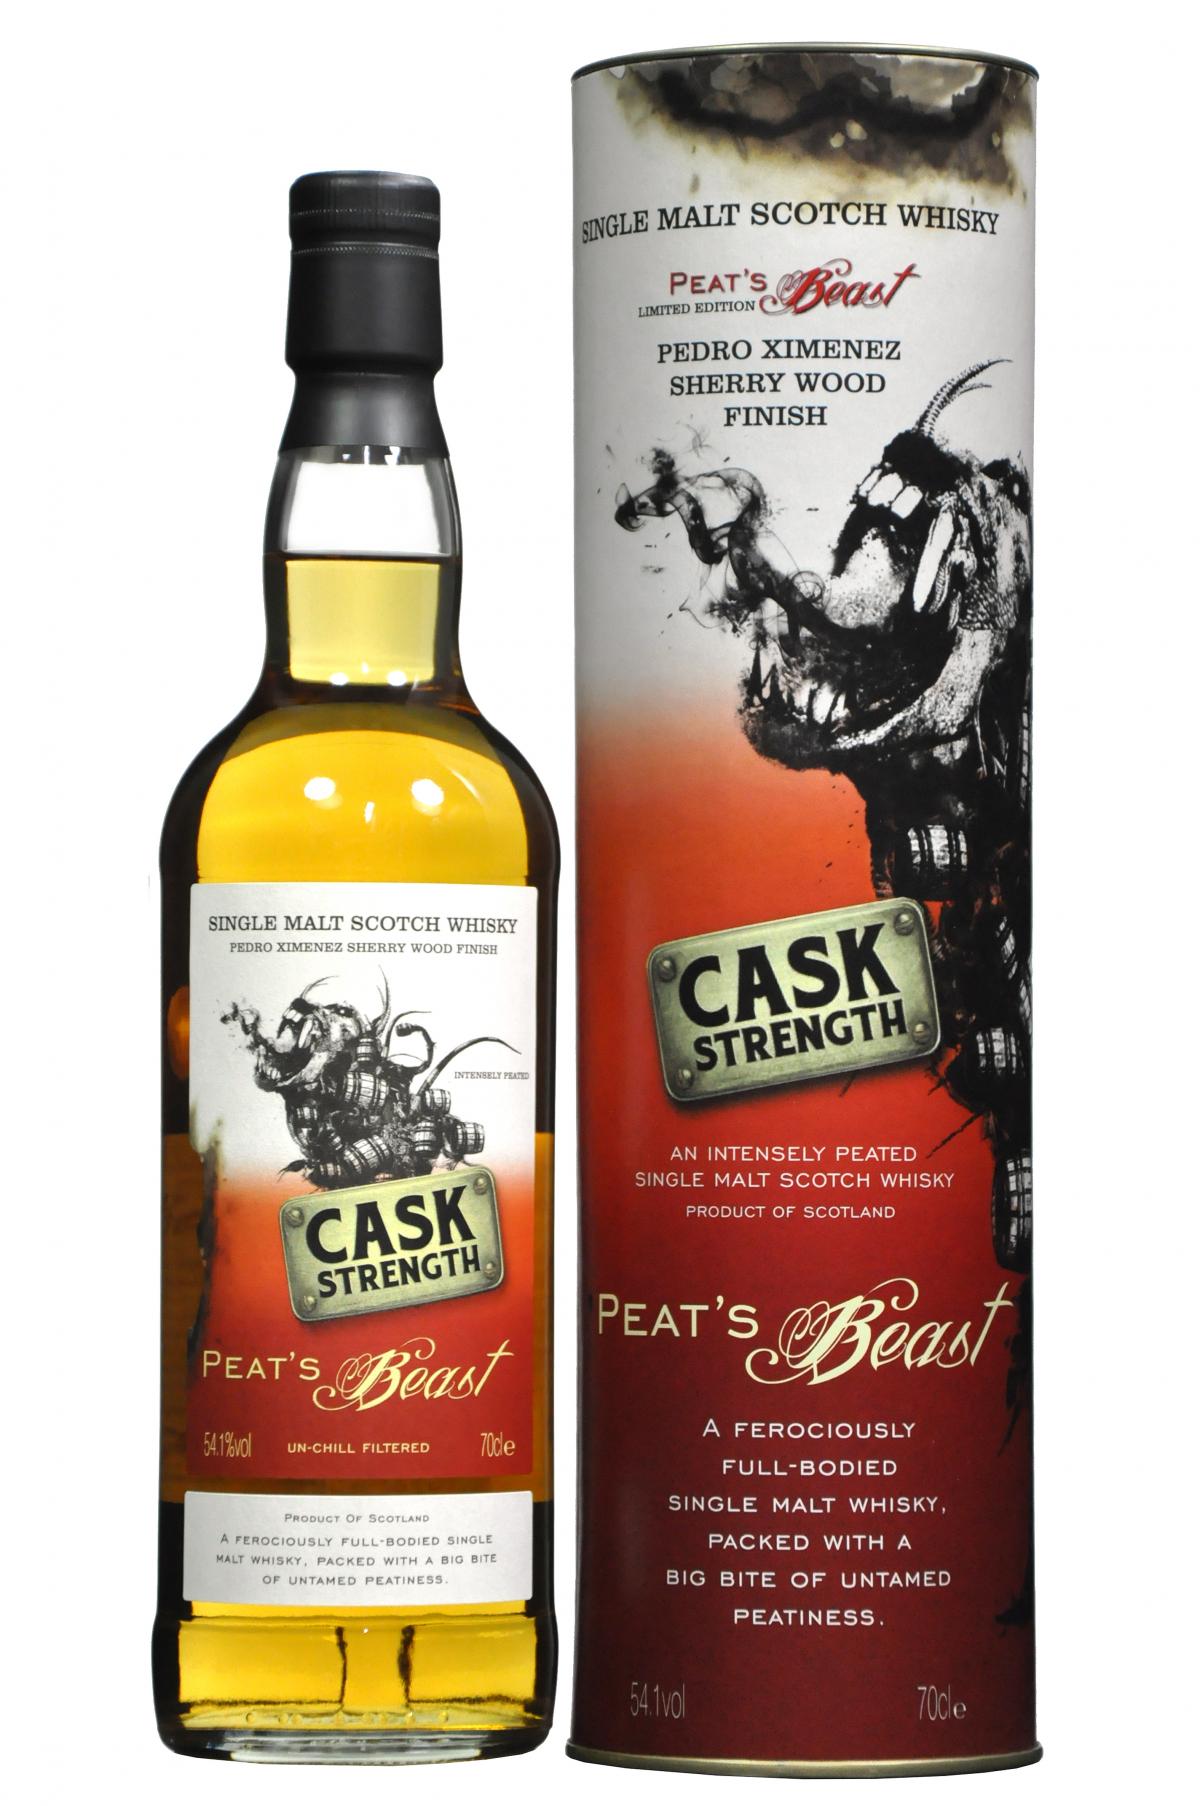 peats beast cask strength single malt scotch whisky